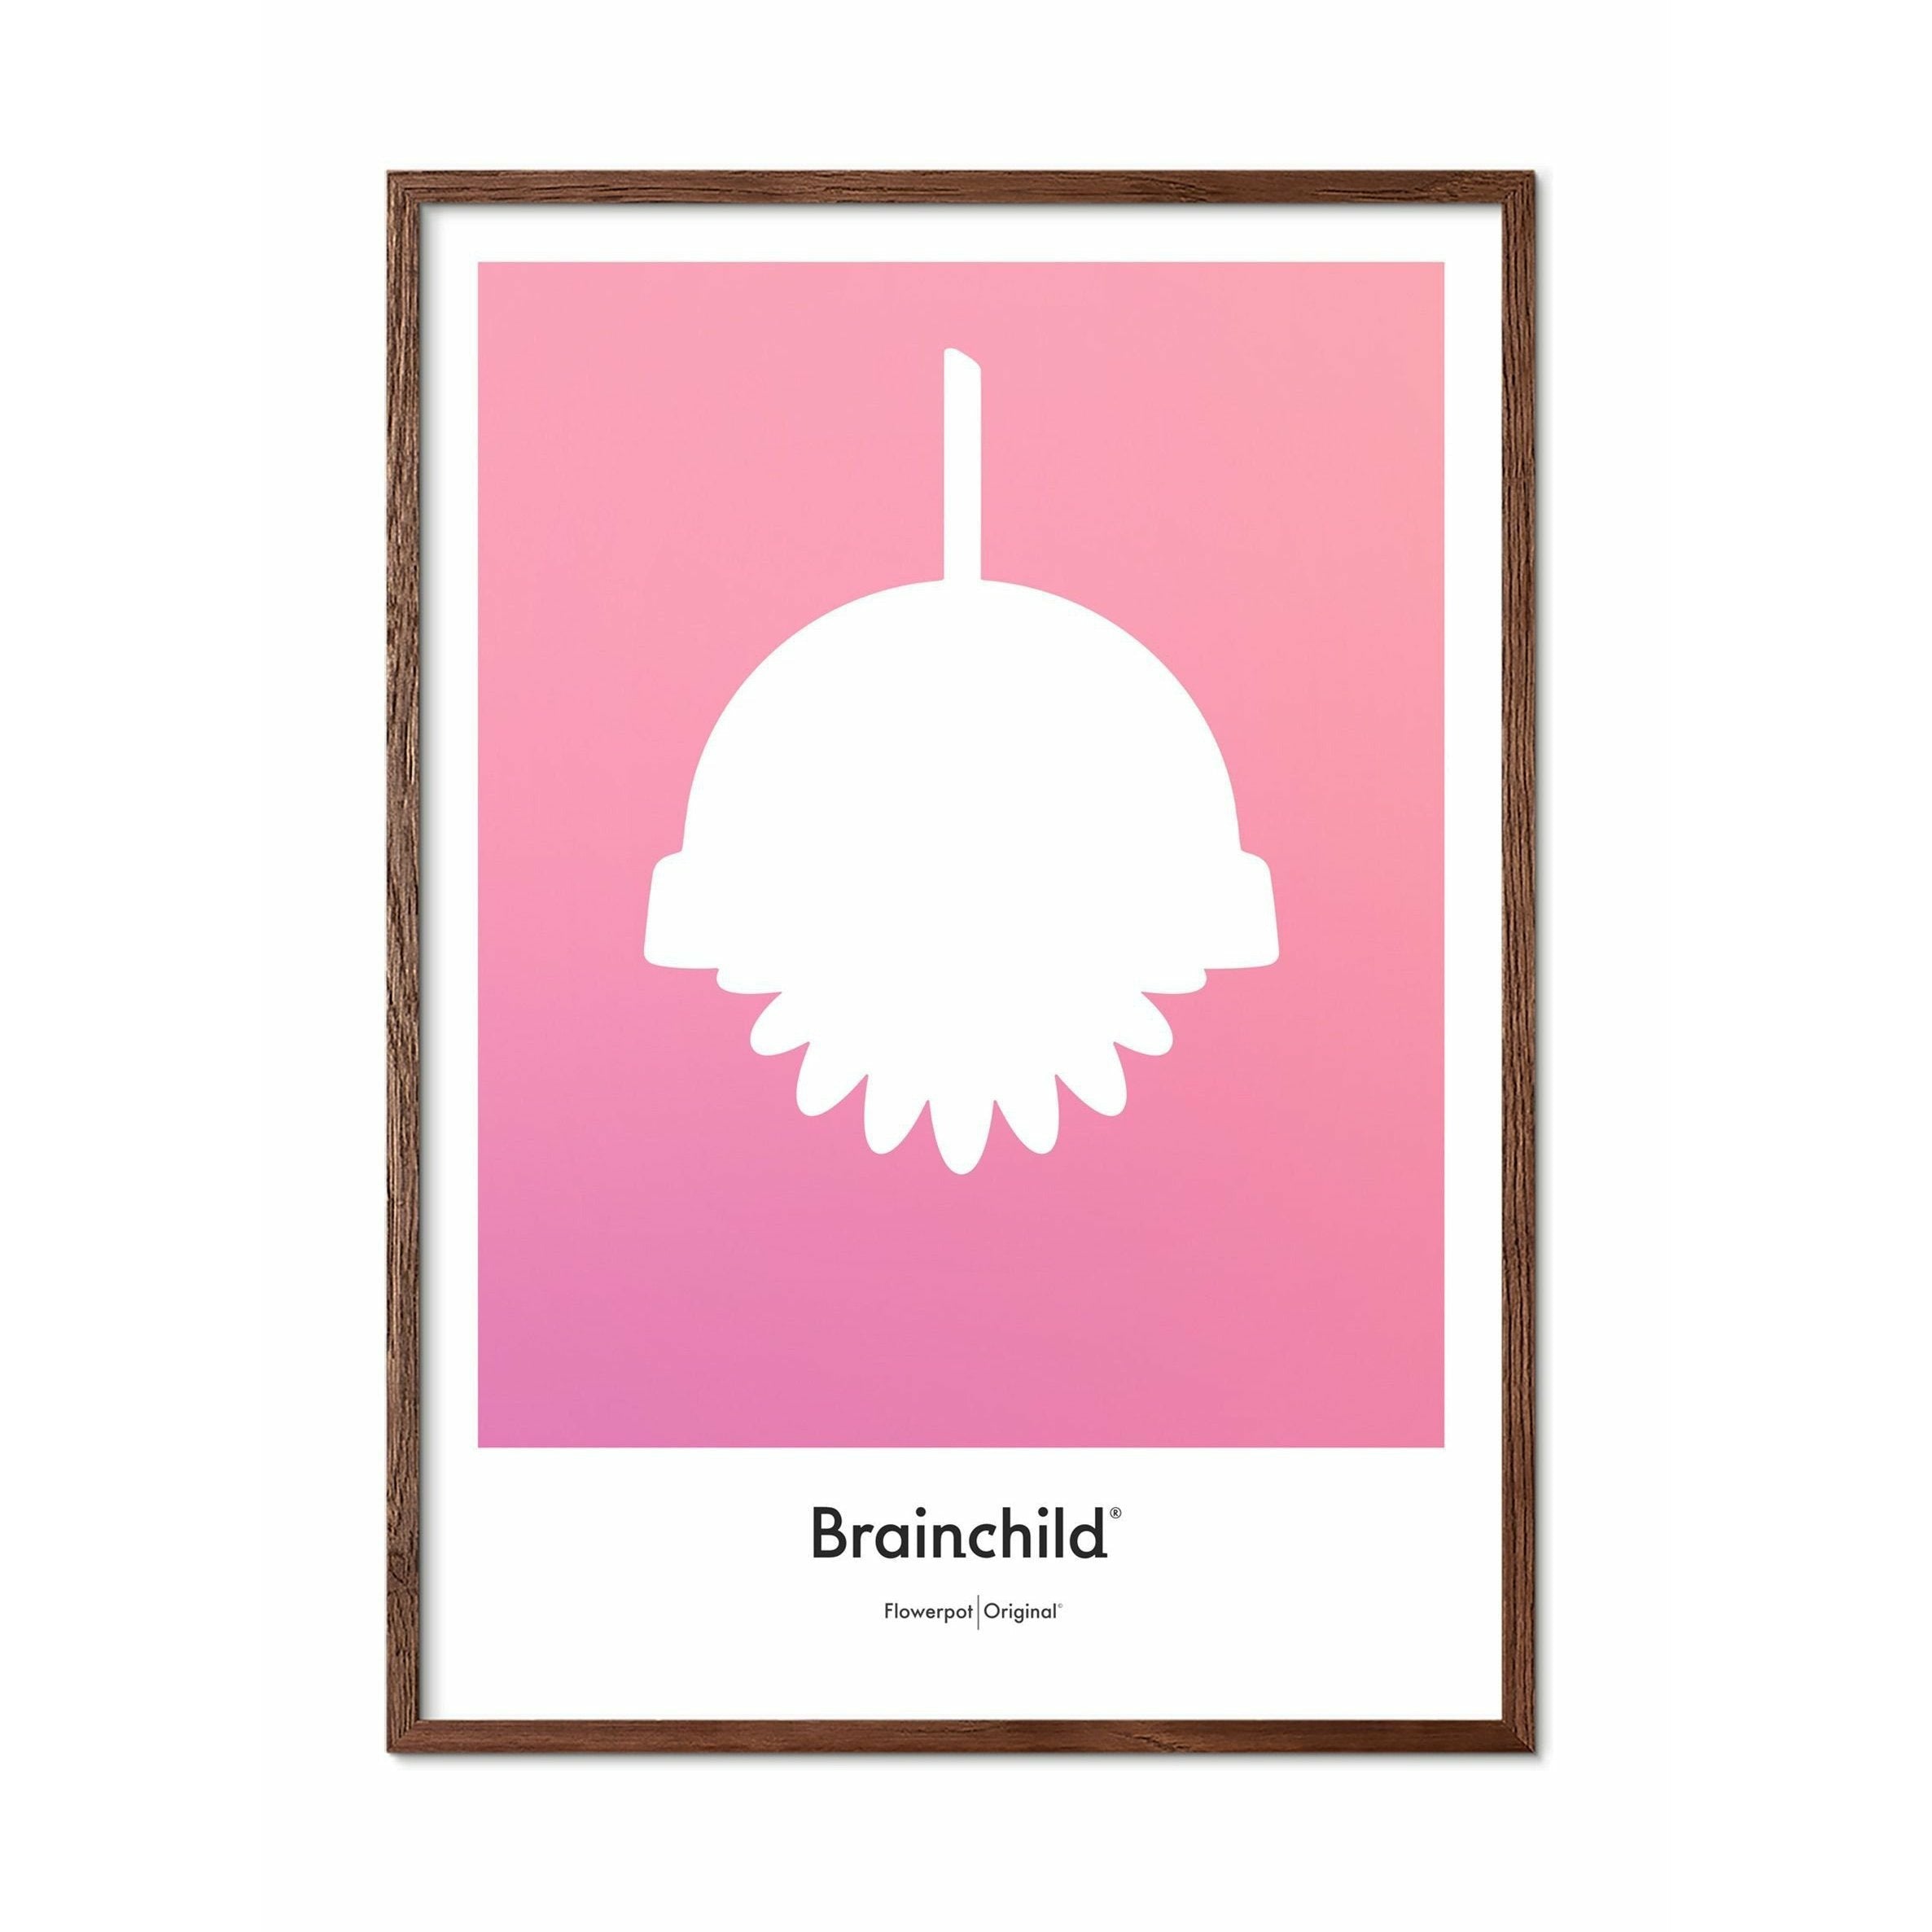 Brainchild Bloemenpotontwerppictogram Poster, donker houten frame A5, roze